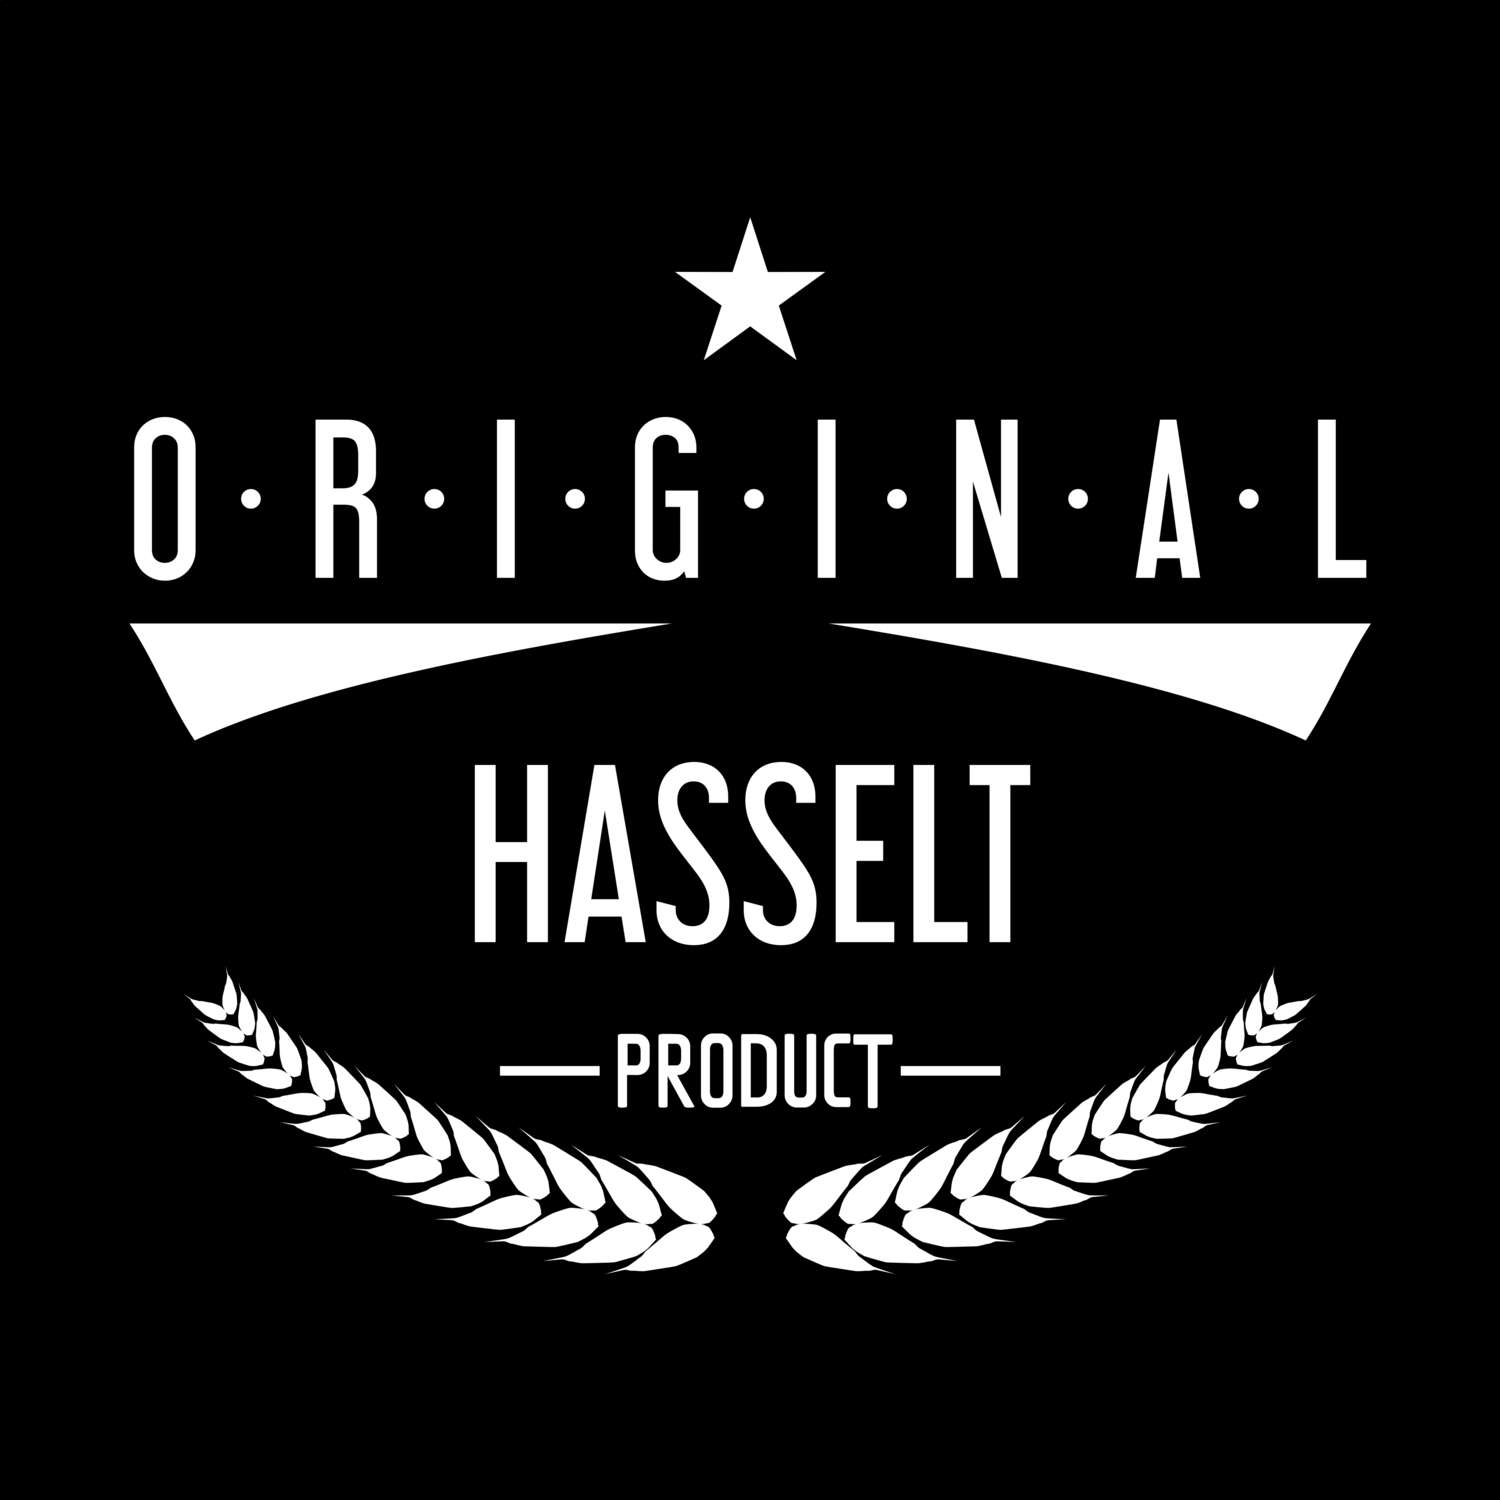 Hasselt T-Shirt »Original Product«